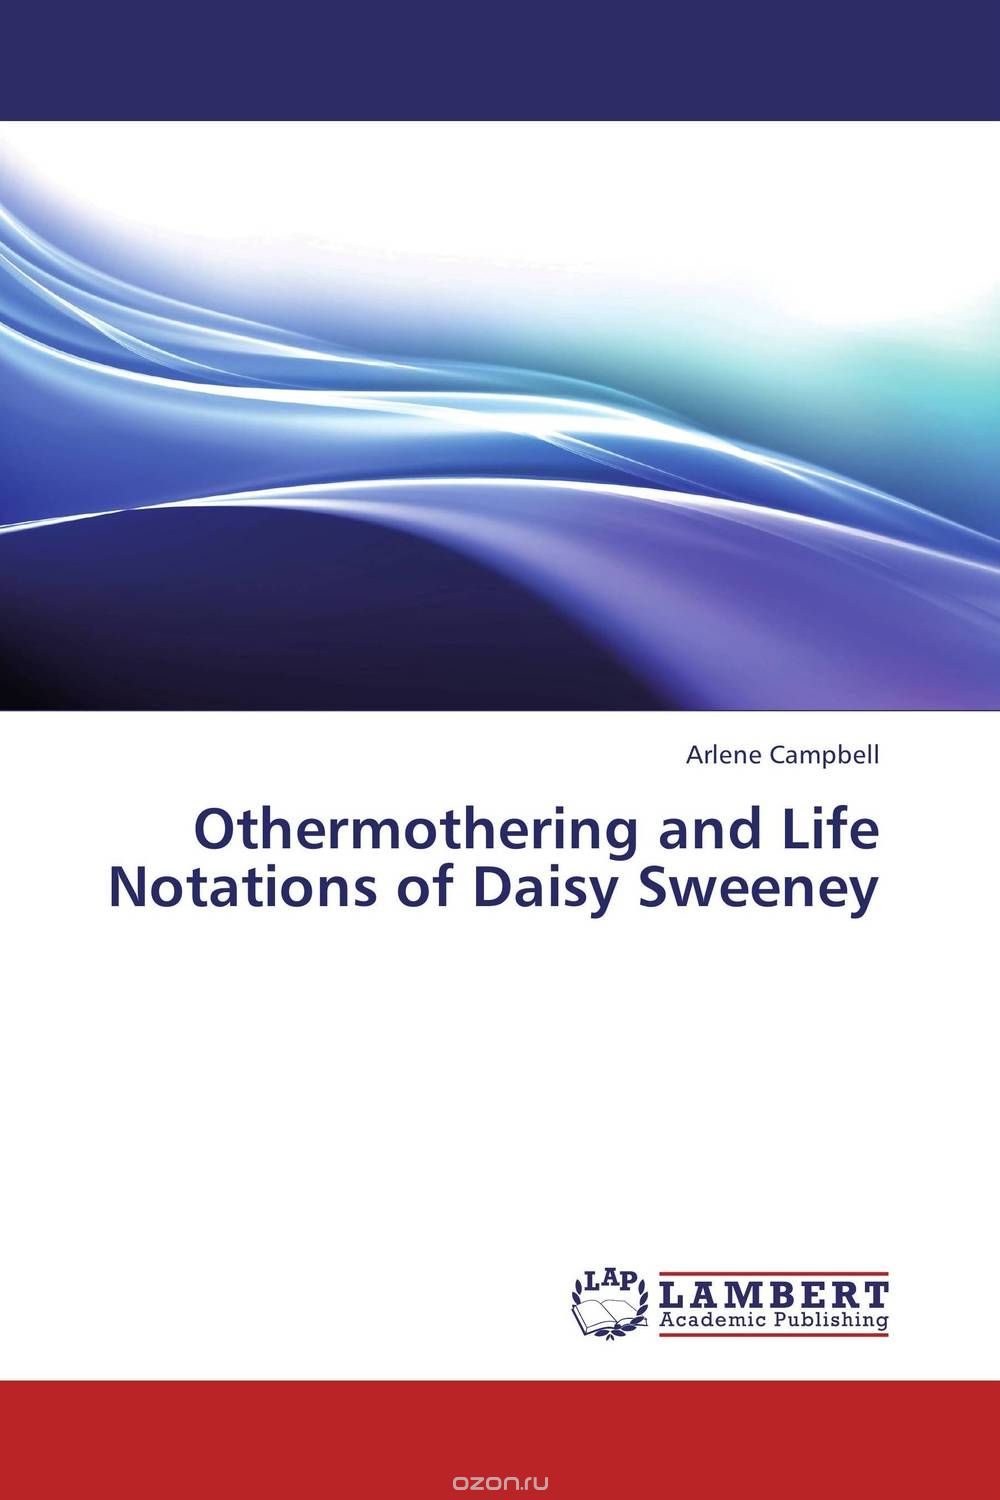 Скачать книгу "Othermothering and Life Notations of Daisy Sweeney"